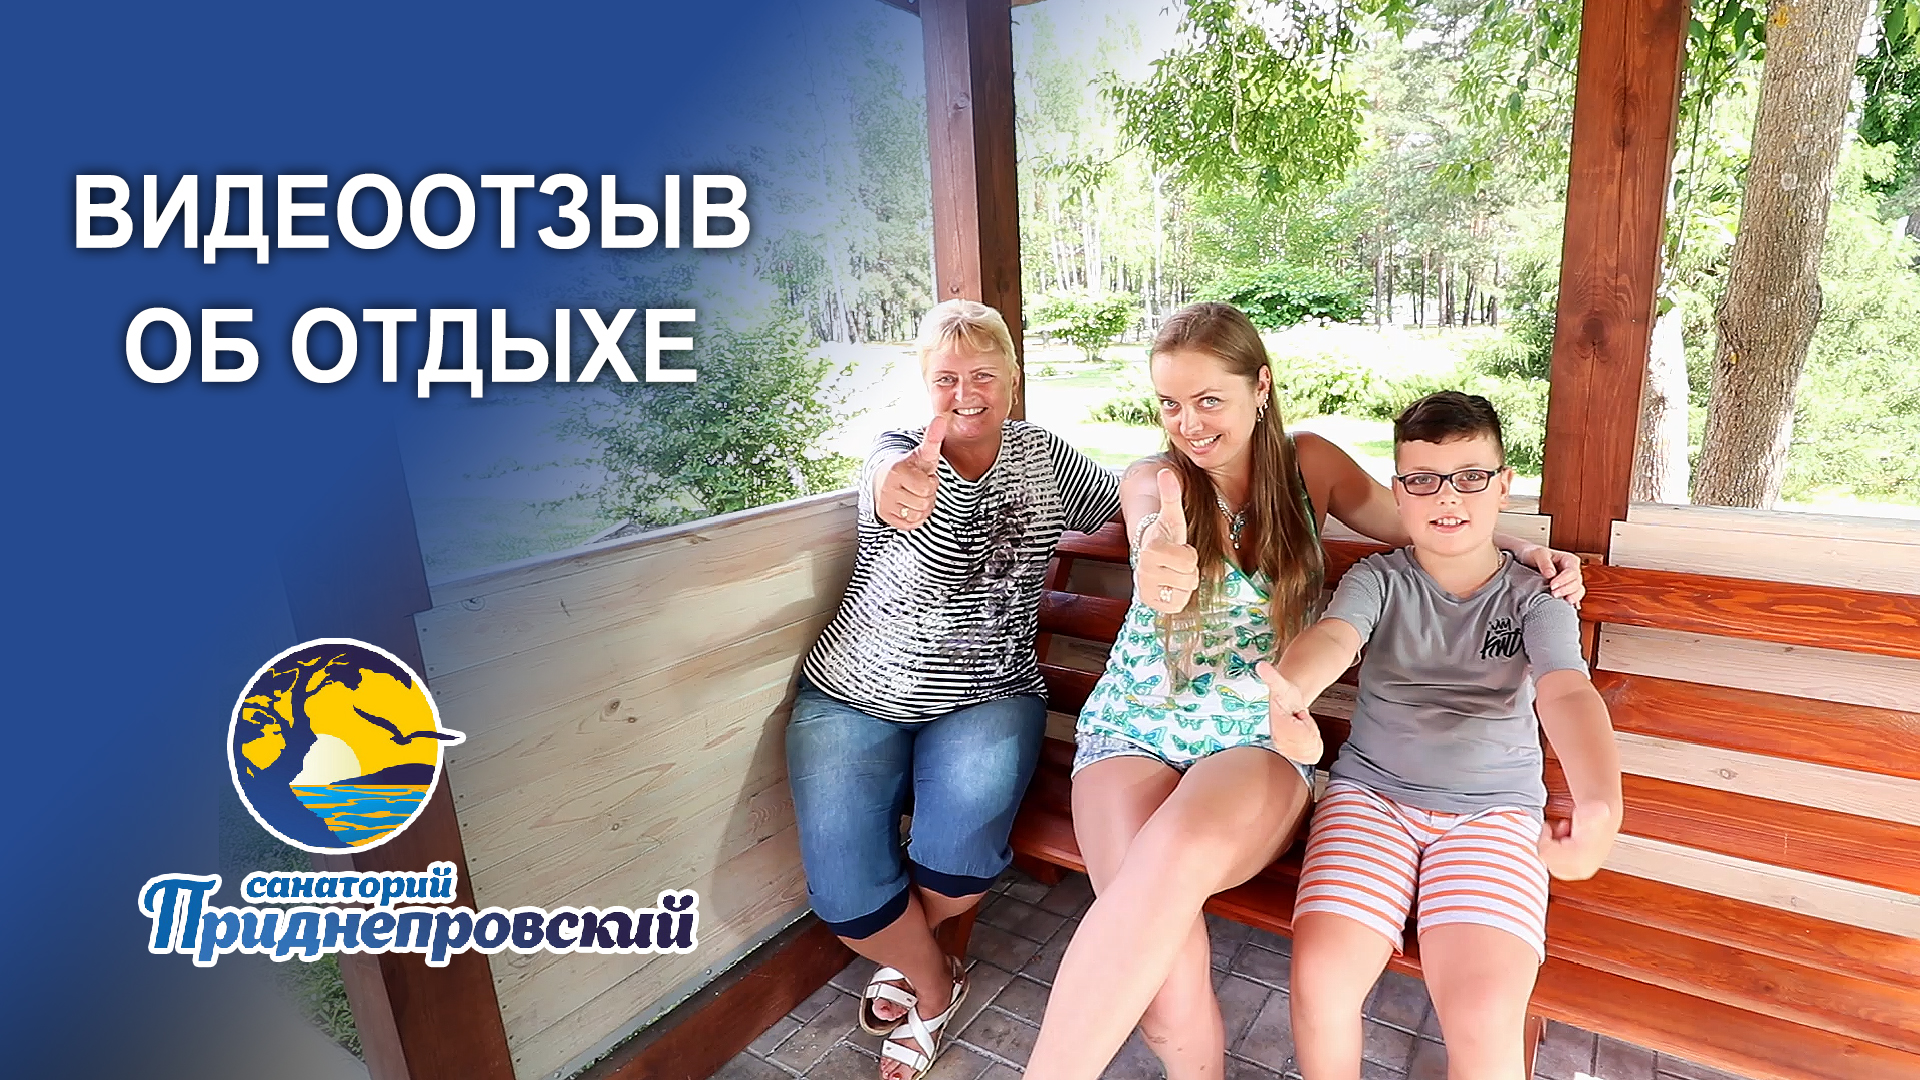 Видеоотзыв об отдыхе в санатории "Приднепровский" в Беларуси